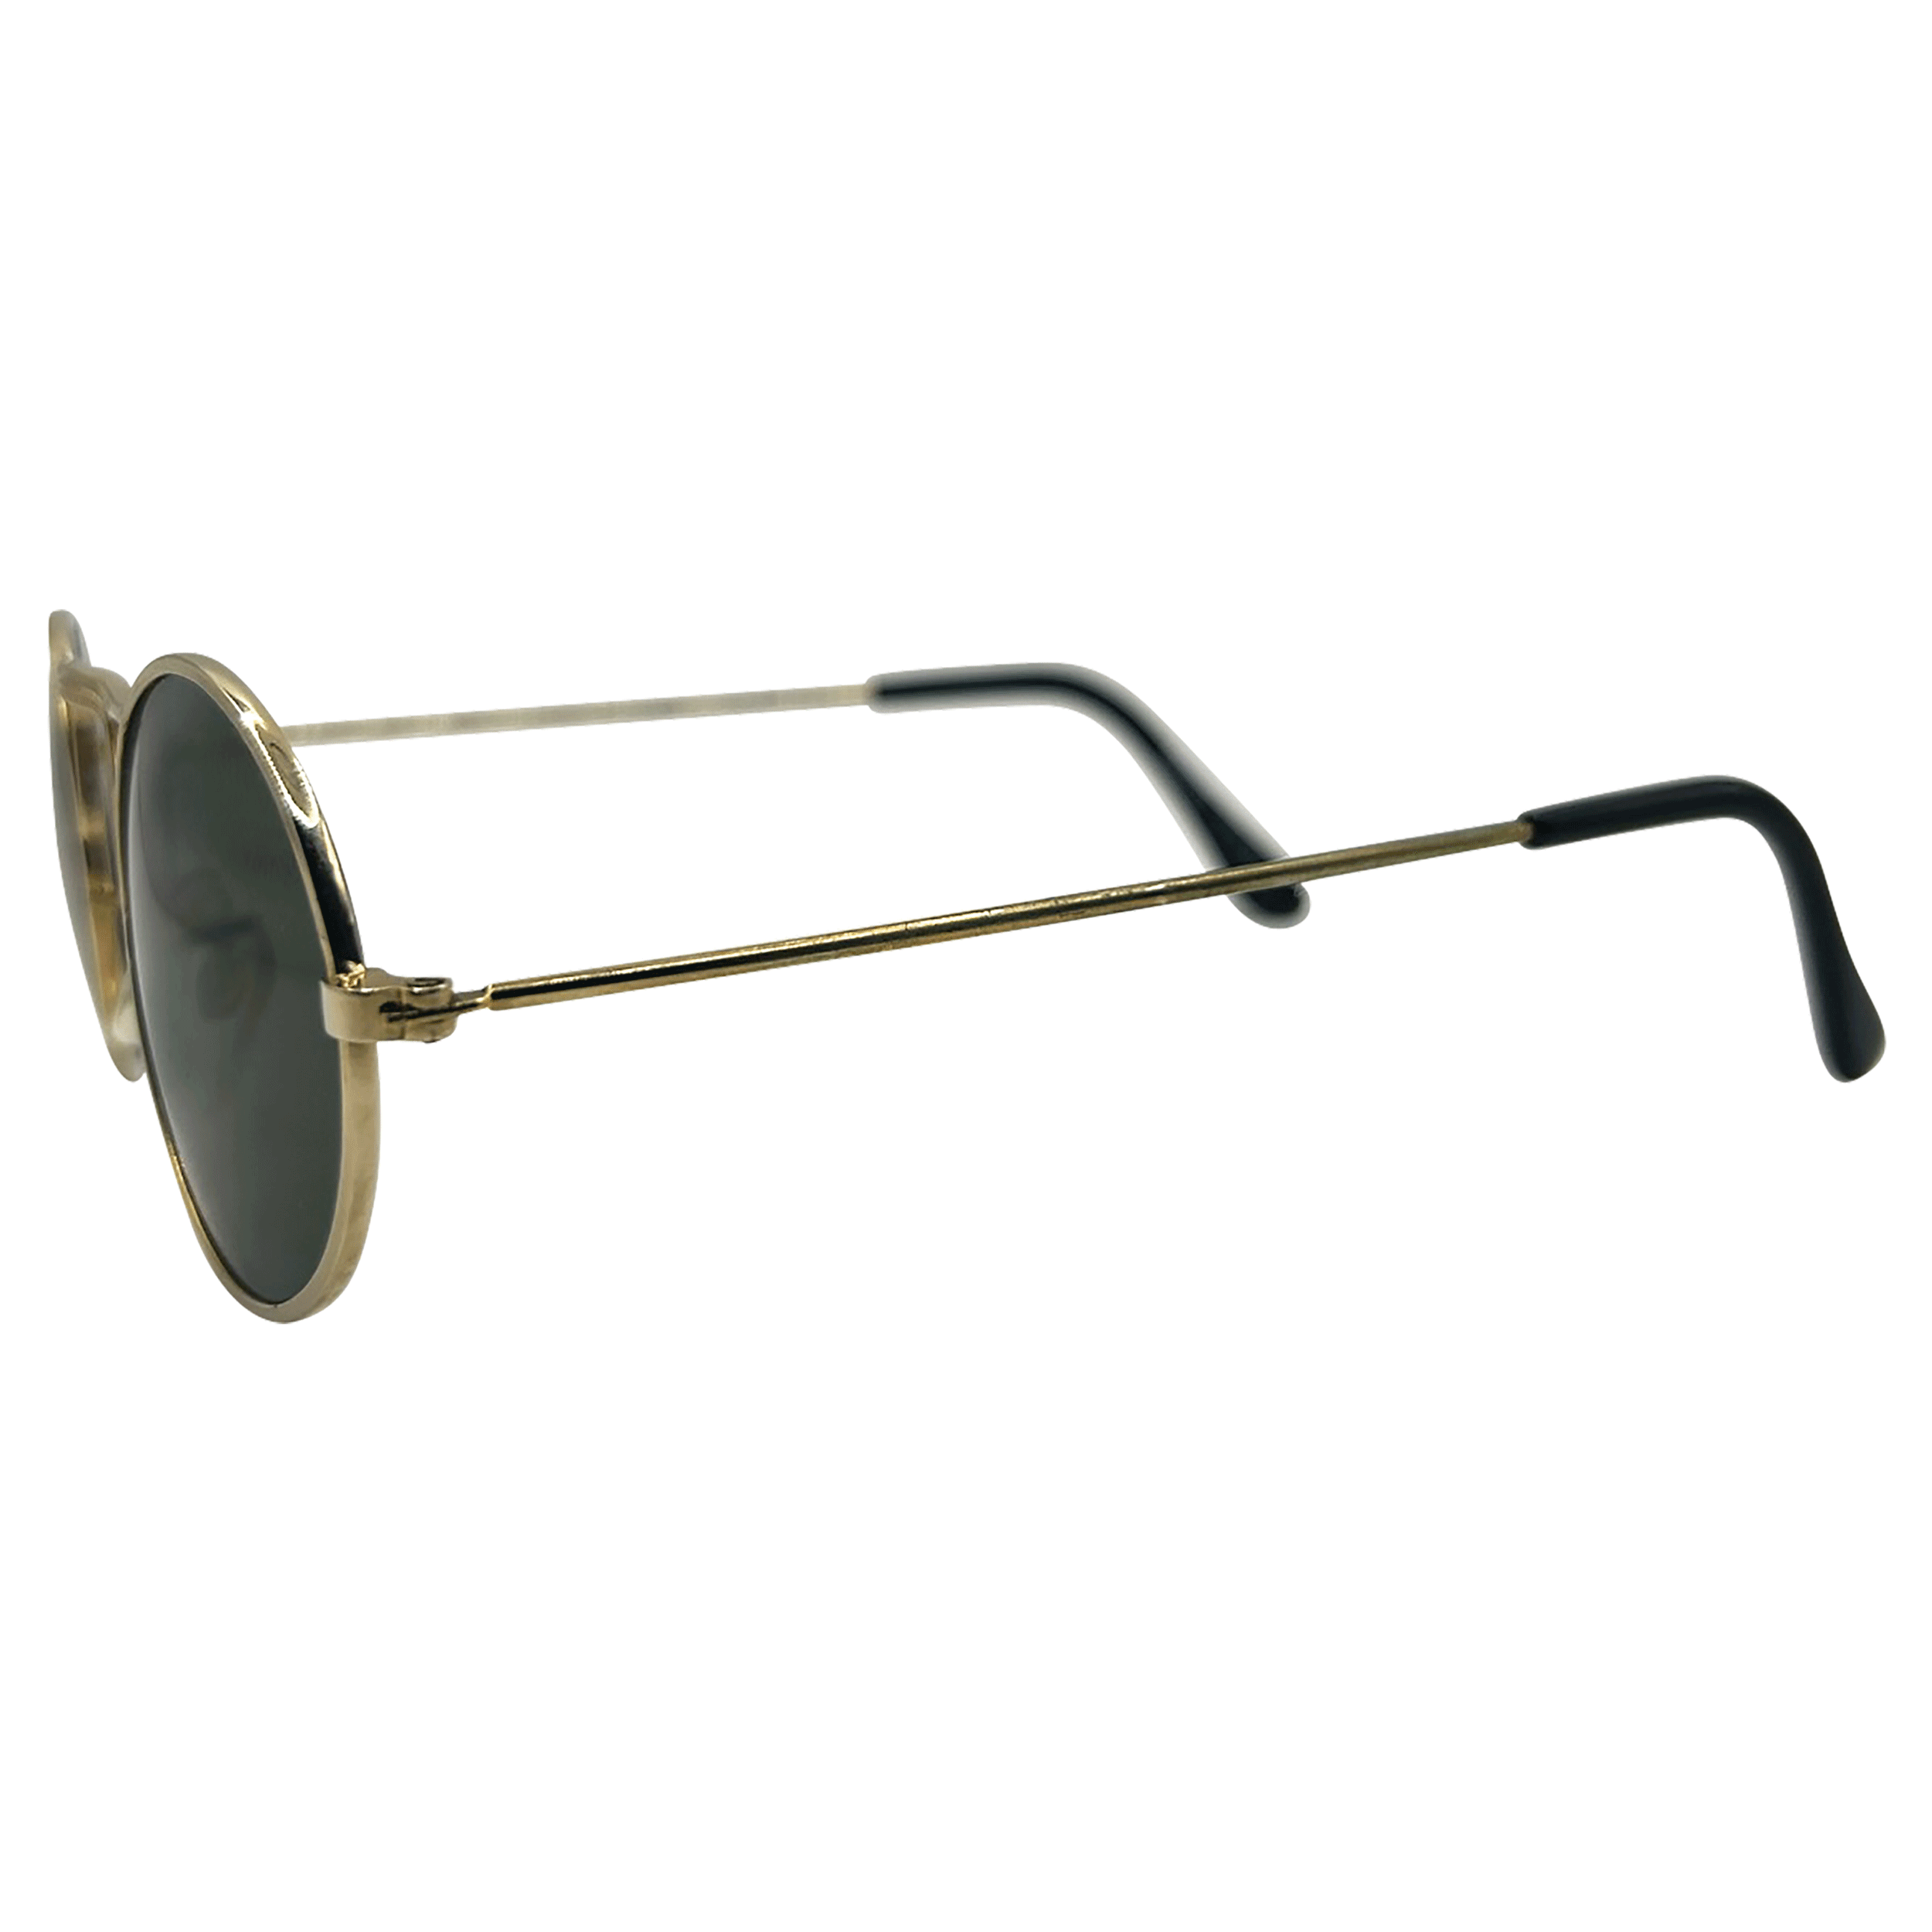 ZIGZAG Round Sunglasses